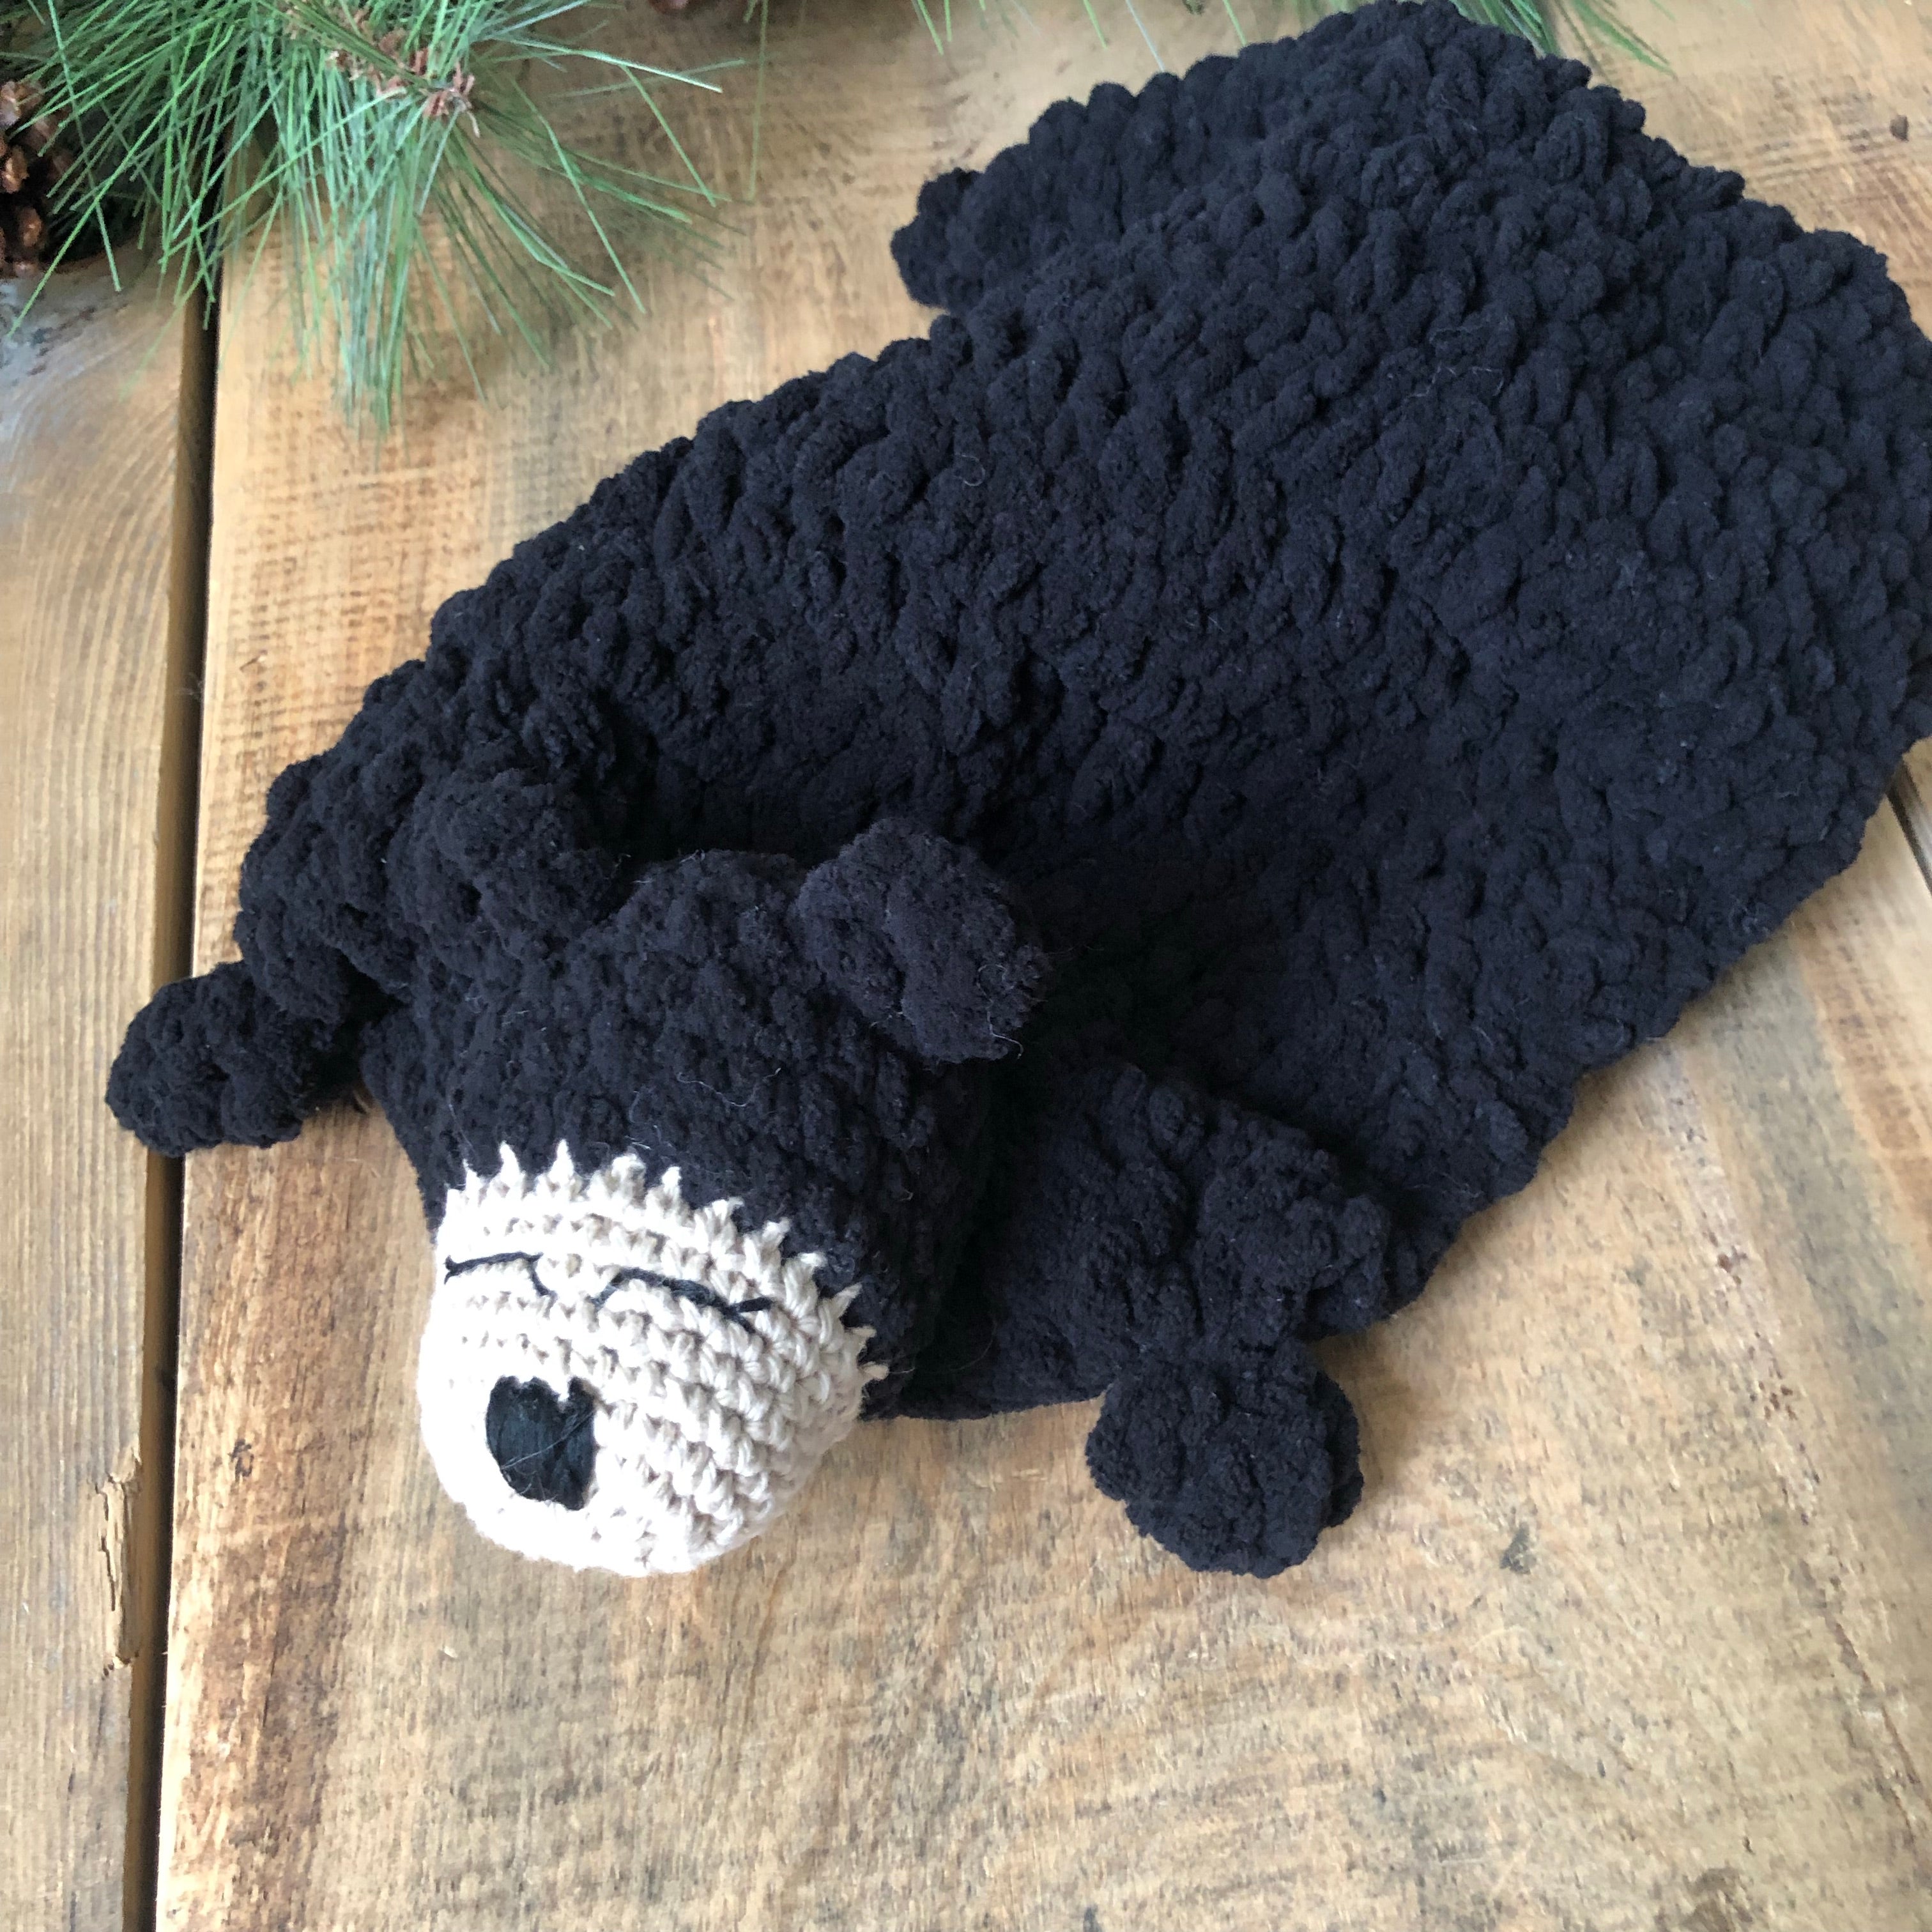 Baby Bear Lovey Black Bear Baby Newborn Gift Ready to Ship